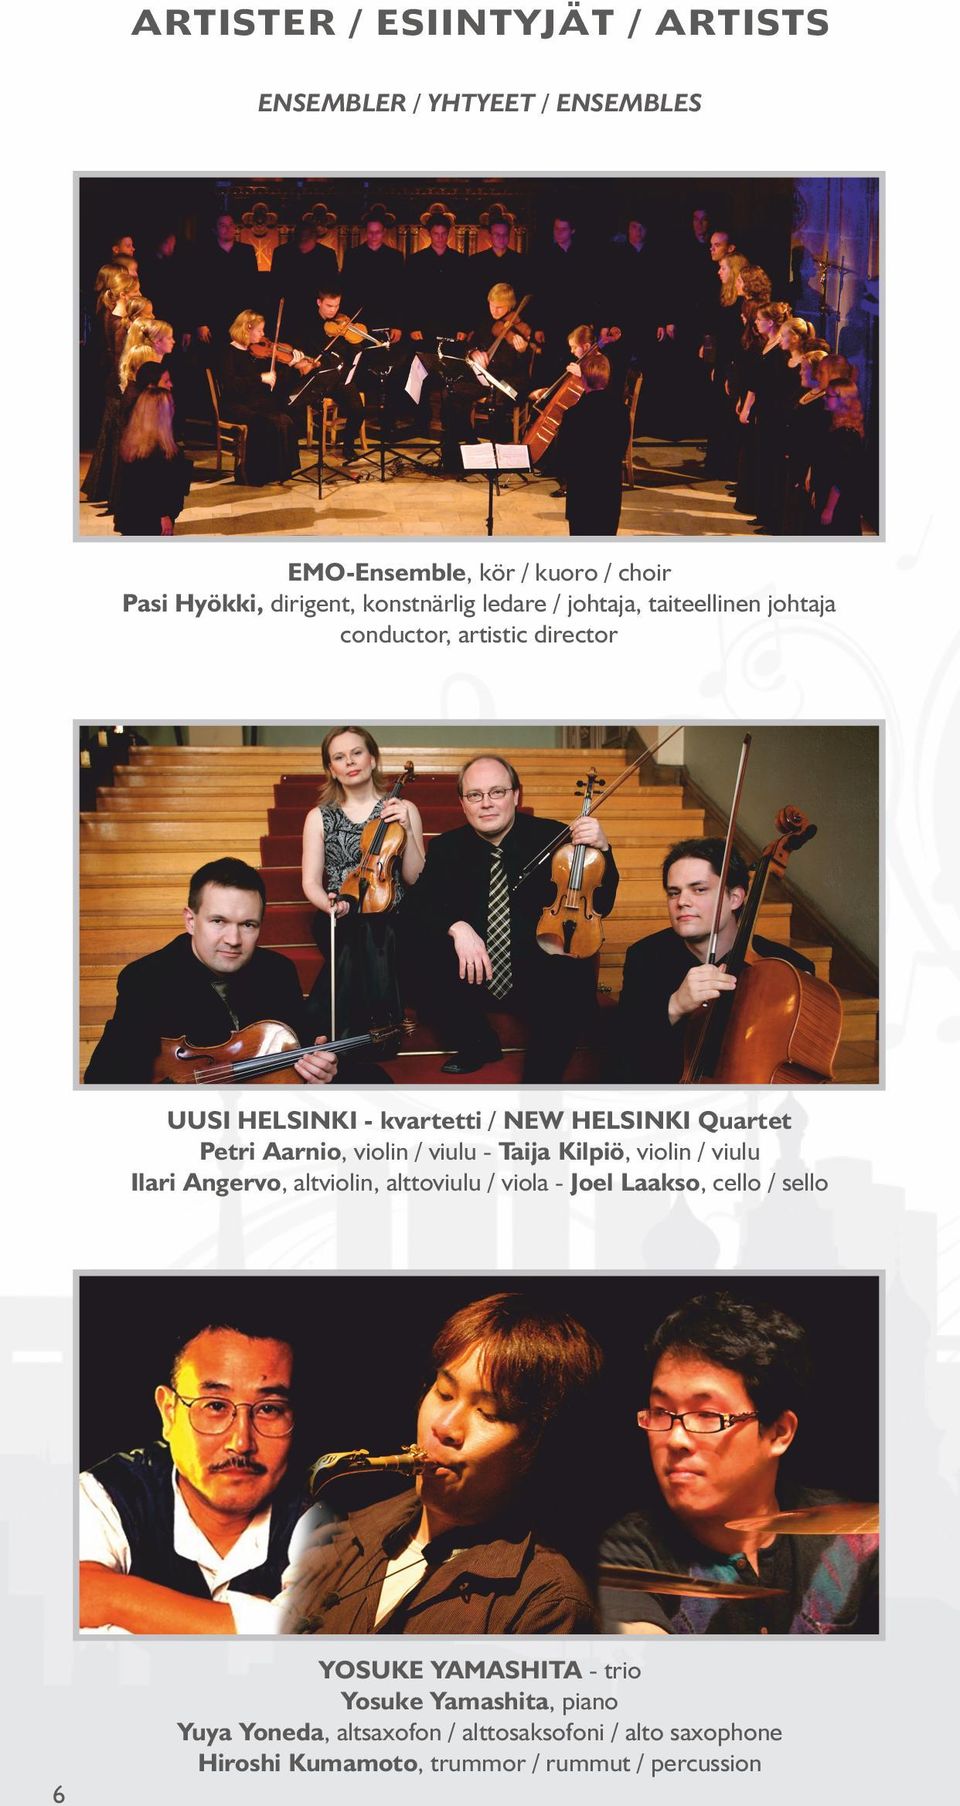 violin / viulu - Taija Kilpiö, violin / viulu Ilari Angervo, altviolin, alttoviulu / viola - Joel Laakso, cello / sello 6 YOSUKE